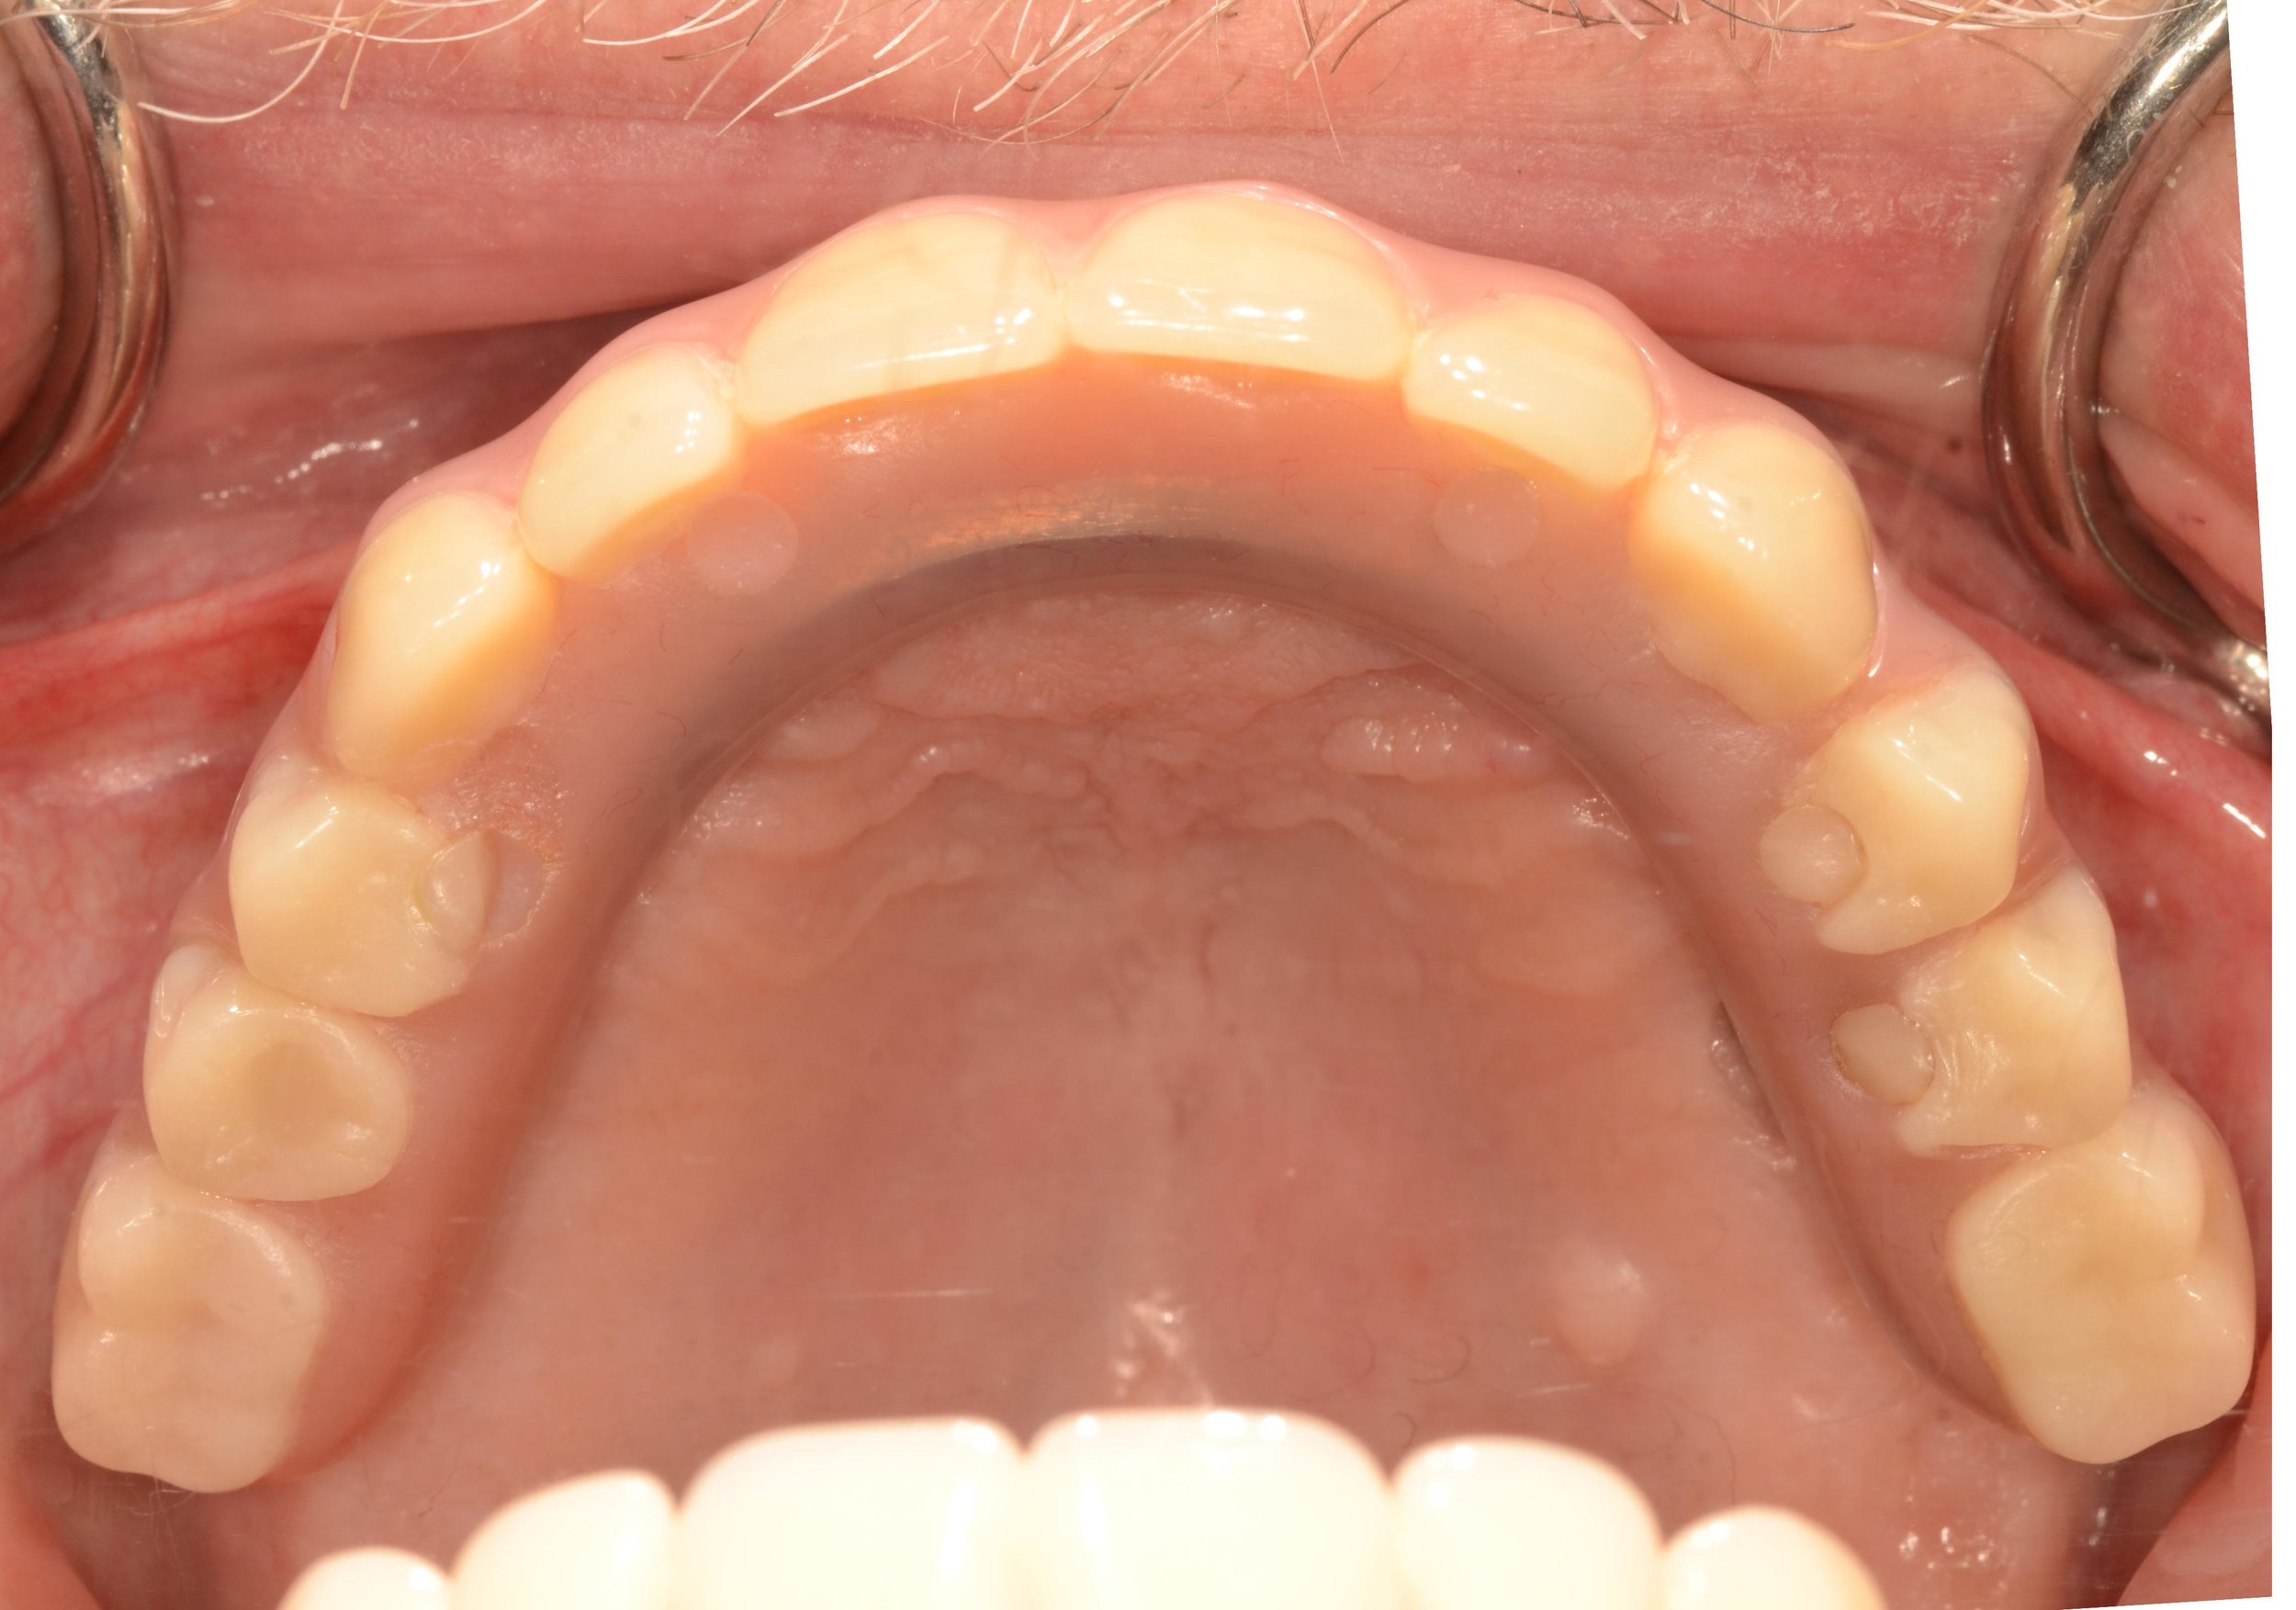 5 Yrs Old Before Complete Upper/Lower Hybrid Denture